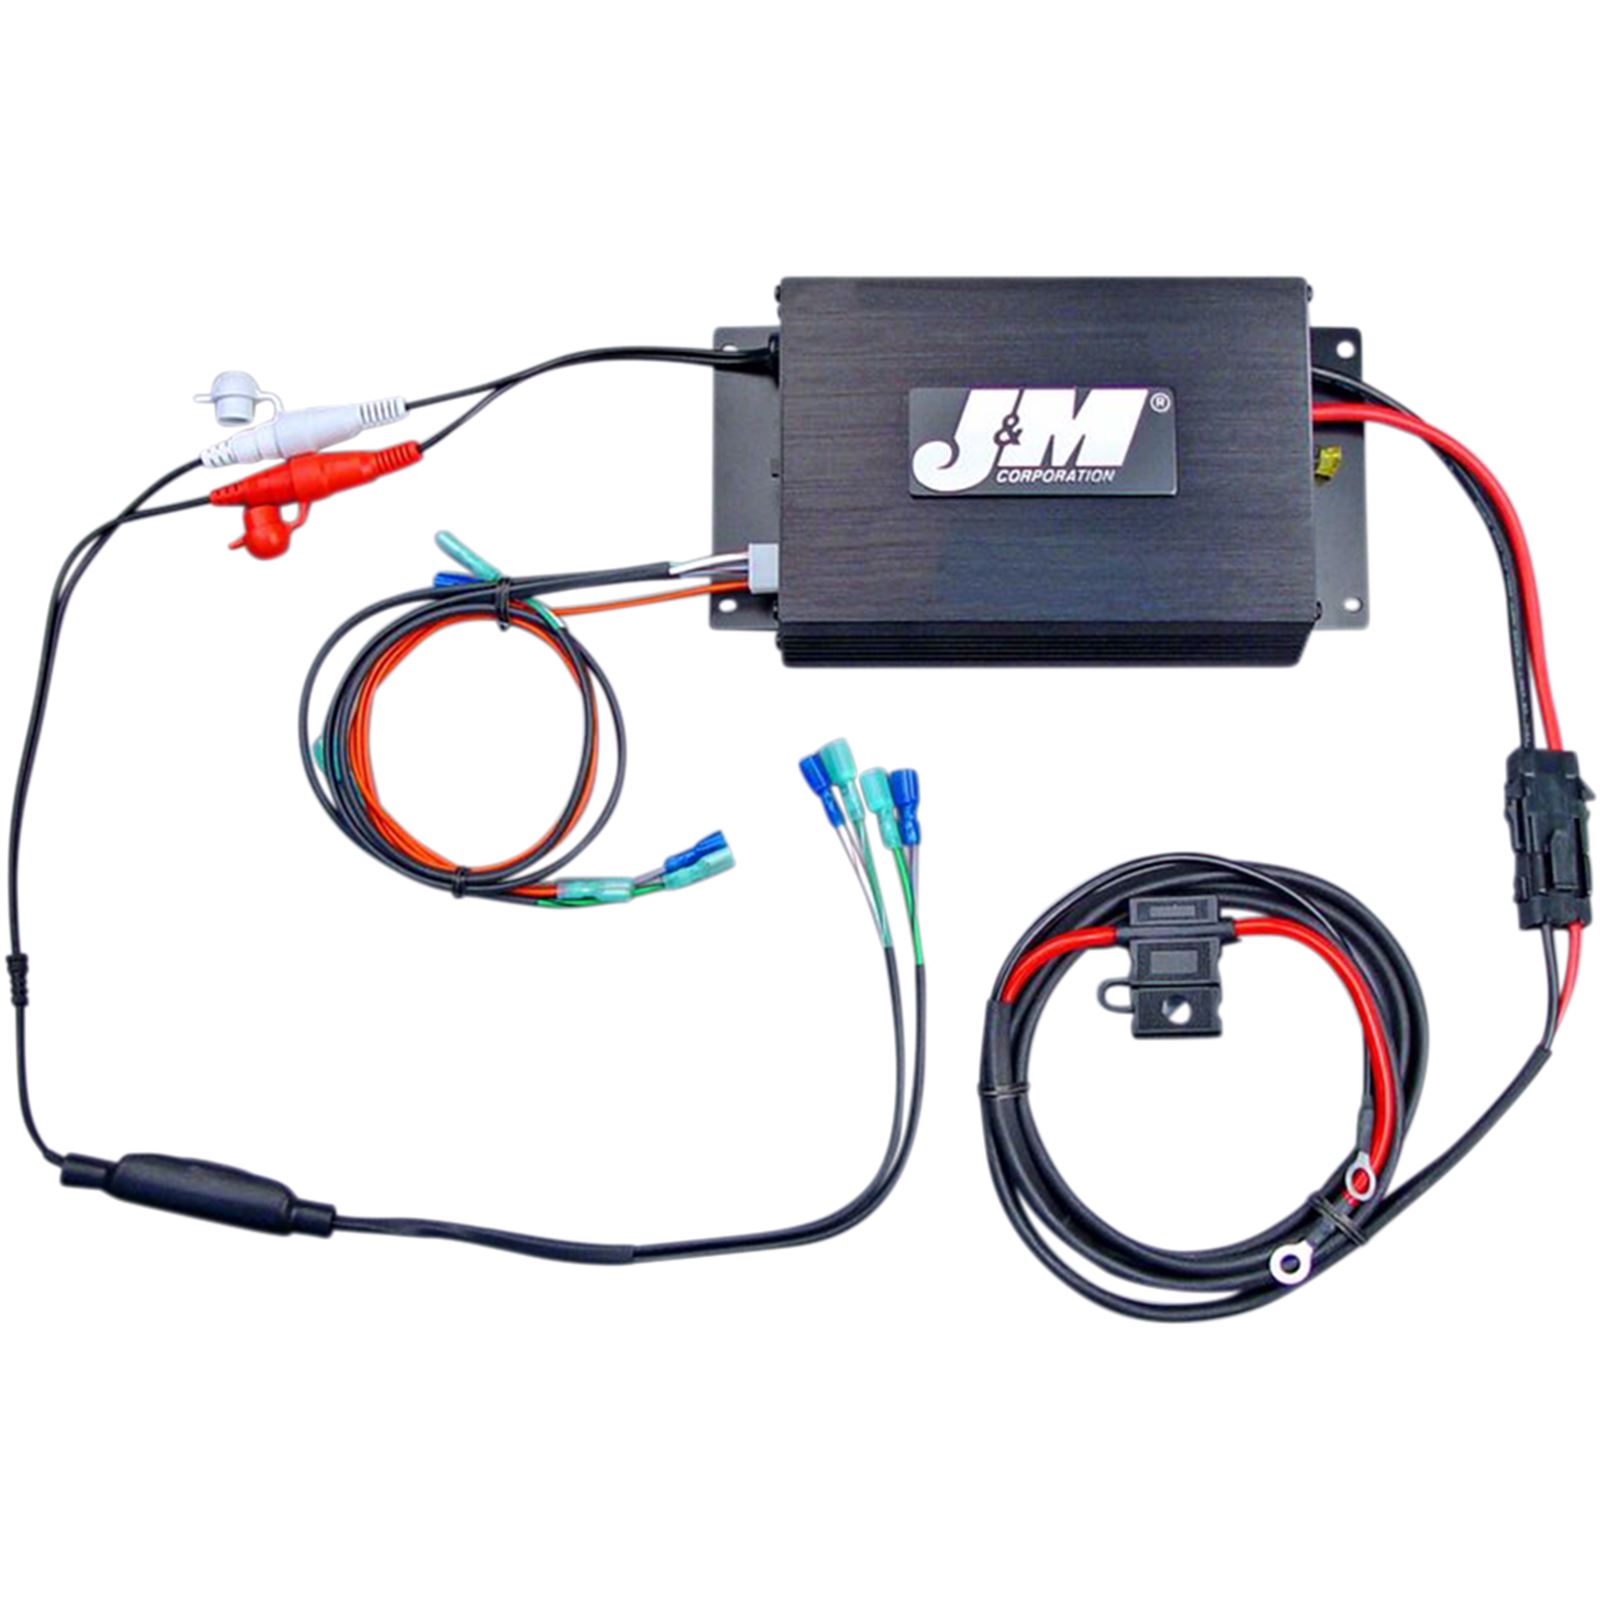 J M Universal - Amp - 200W